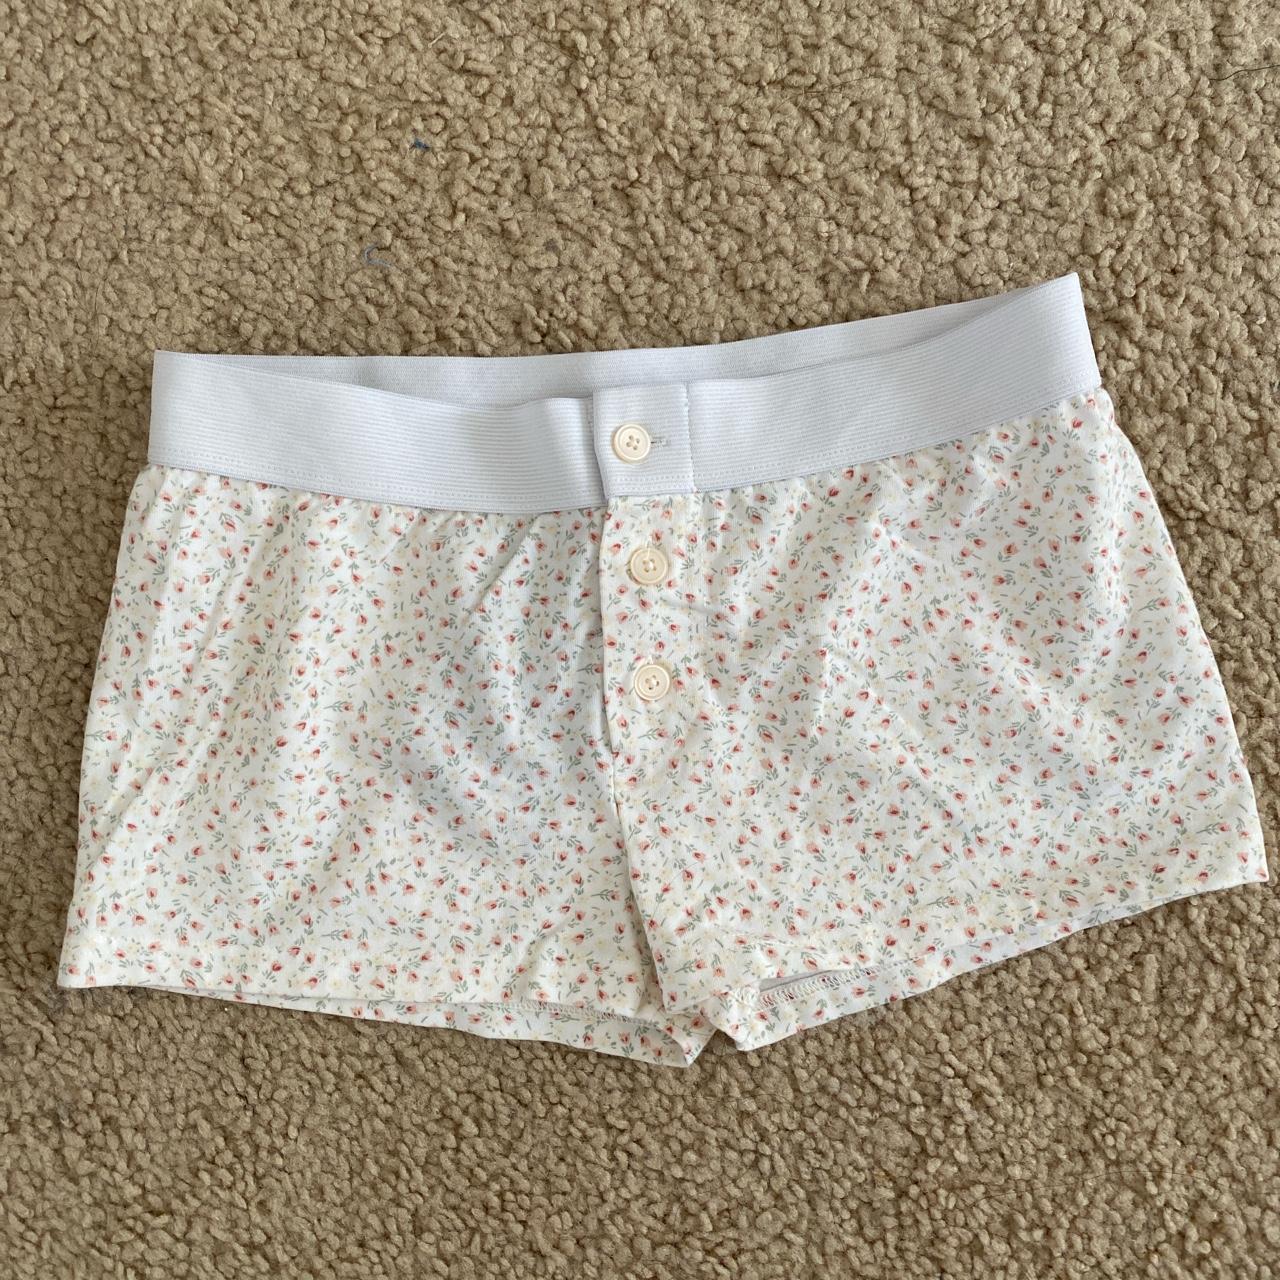 Brandy melville floral boy shorts - Depop